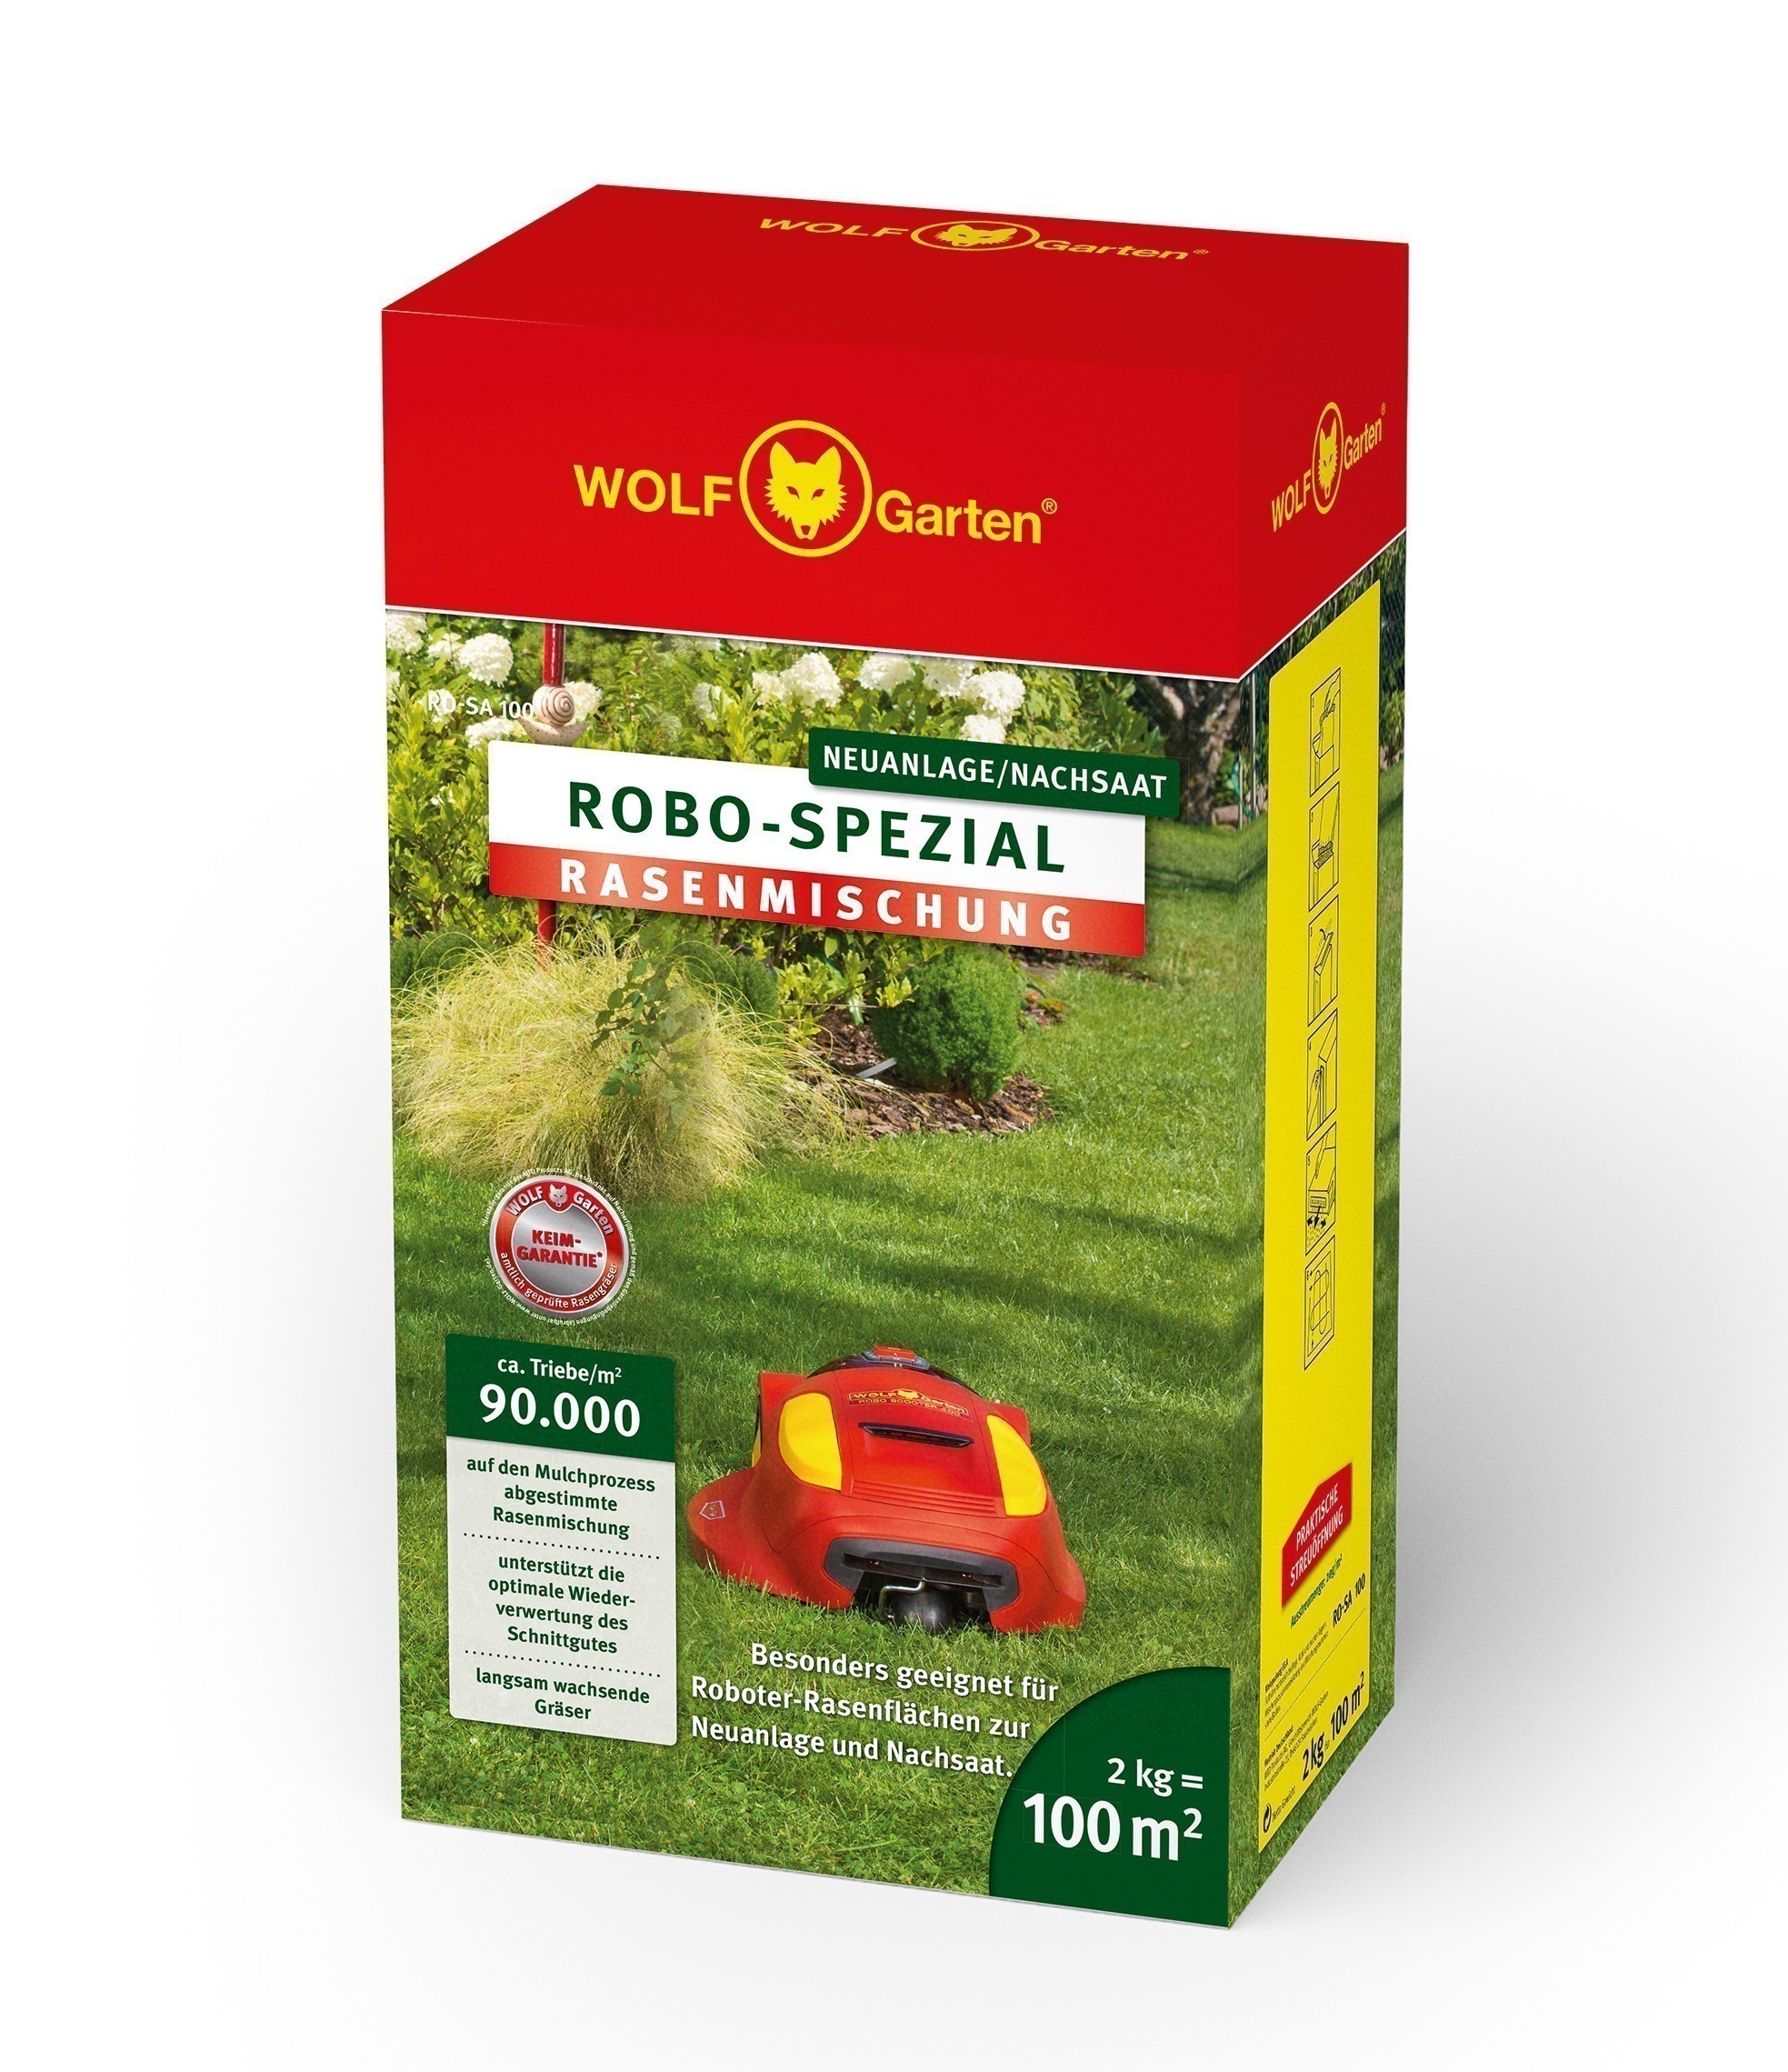 Wolf Garten Rasensamen Saatgut Robo Spezial RO-SA 100 für 100m²